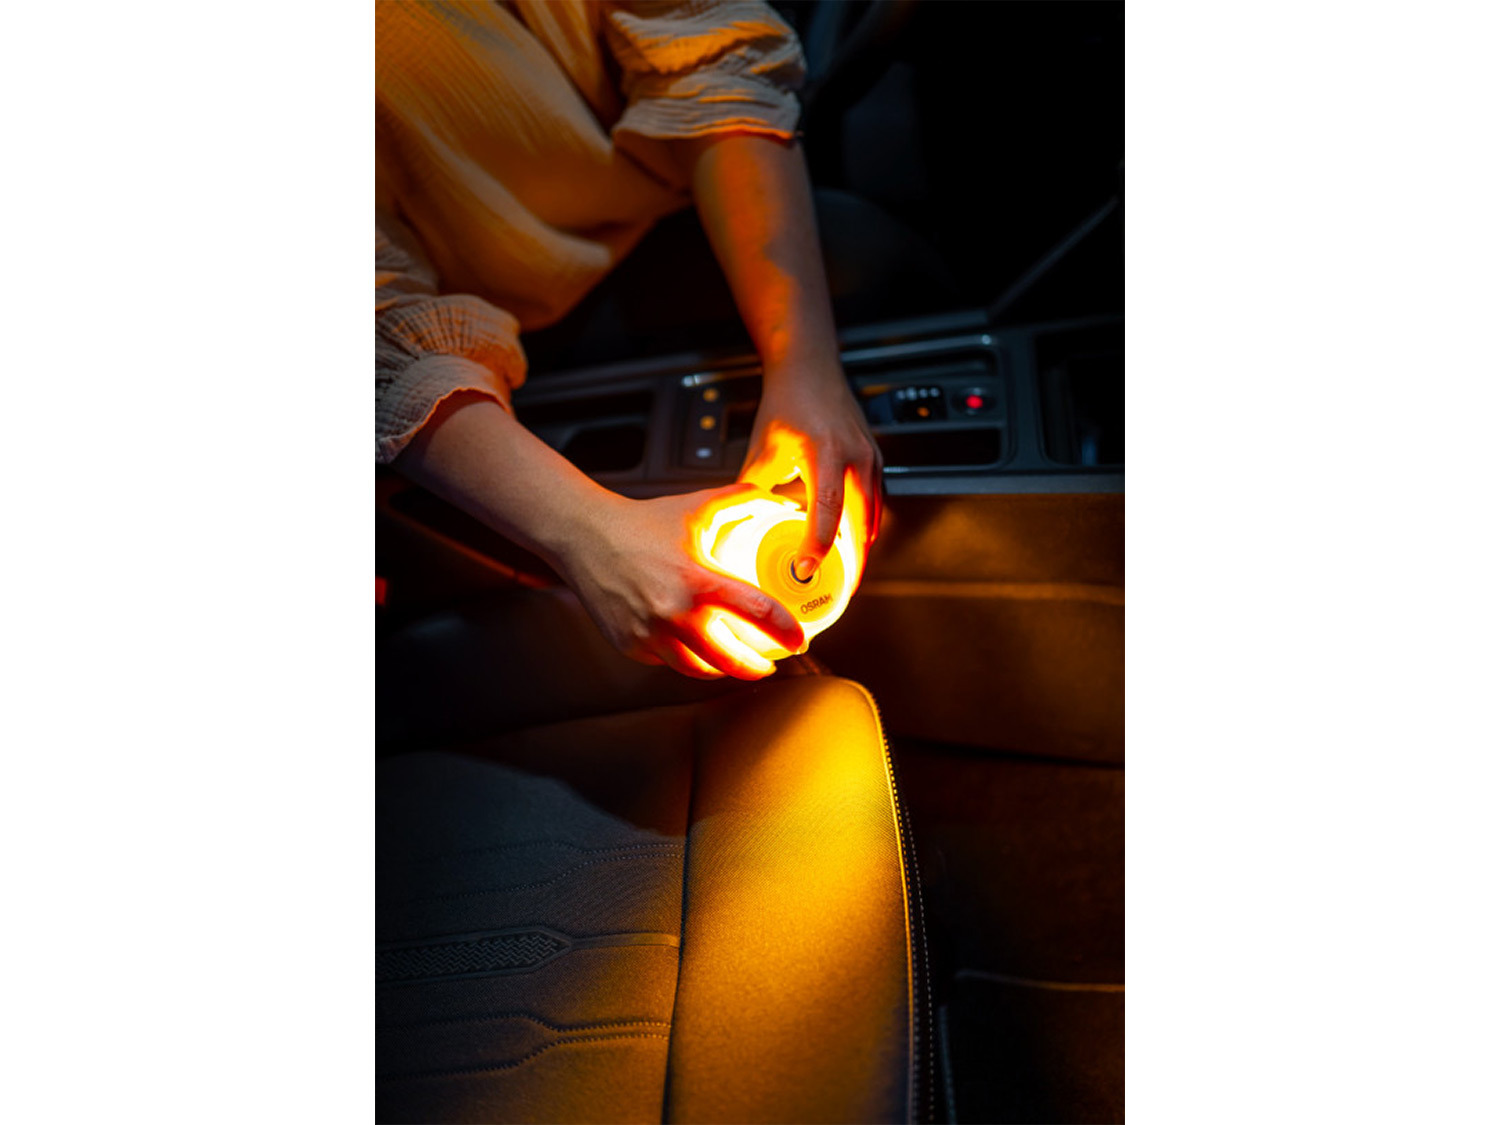 OSRAM LEDSL104 ROAD FLARE Signal TA20 Safety beacon LED light, Magnetic  fastener Cars, HGVs, Quads, SUVs, ATVs, Camper v